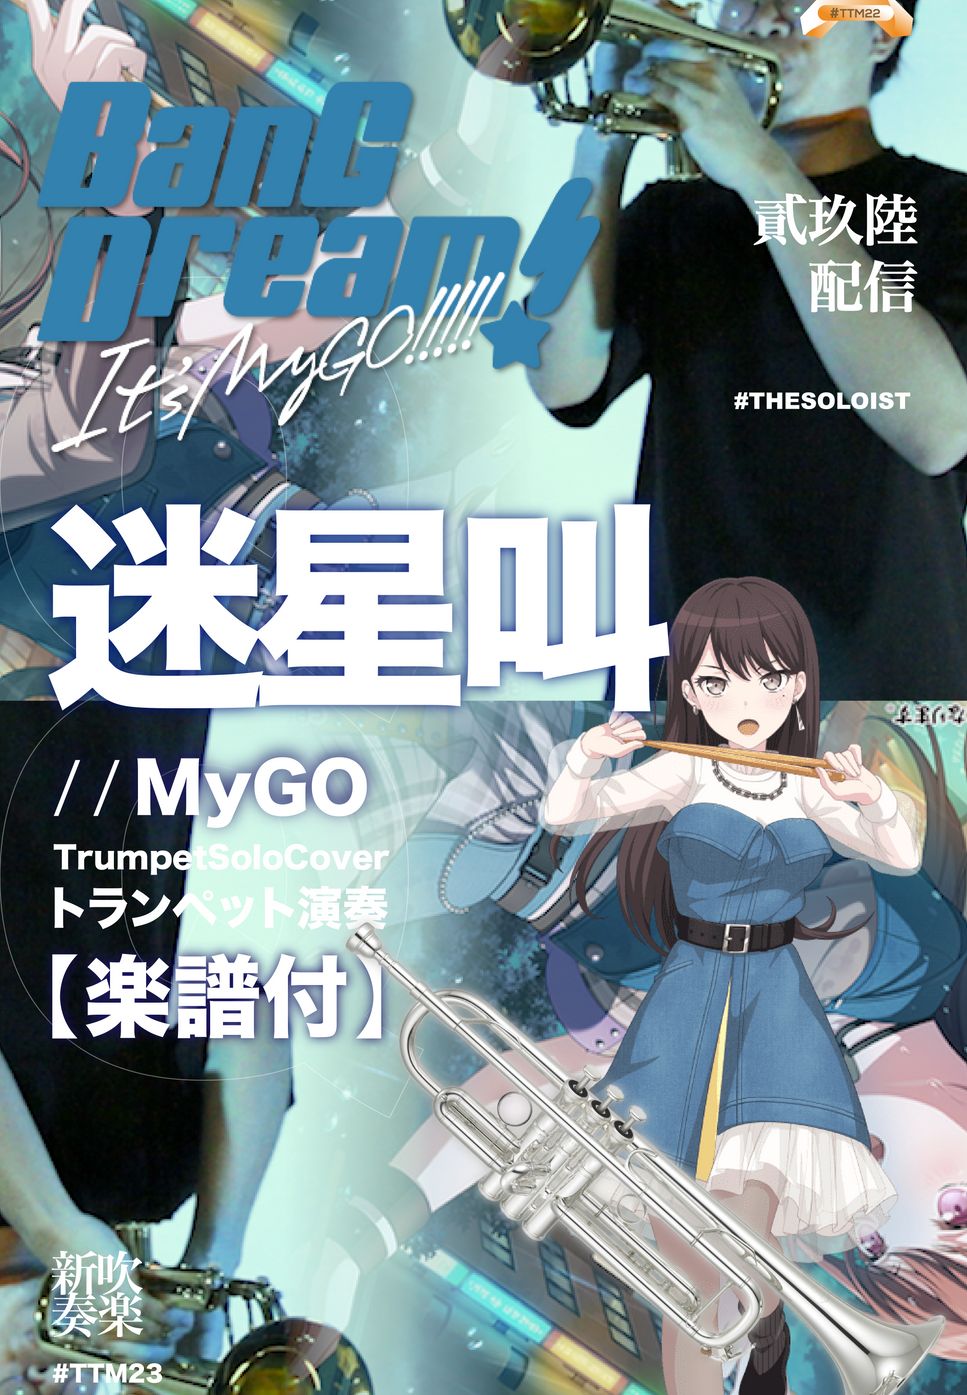 MyGO - Mayoiuta (C/ Bb/ F/ Eb Solo Sheet Music) by 凱